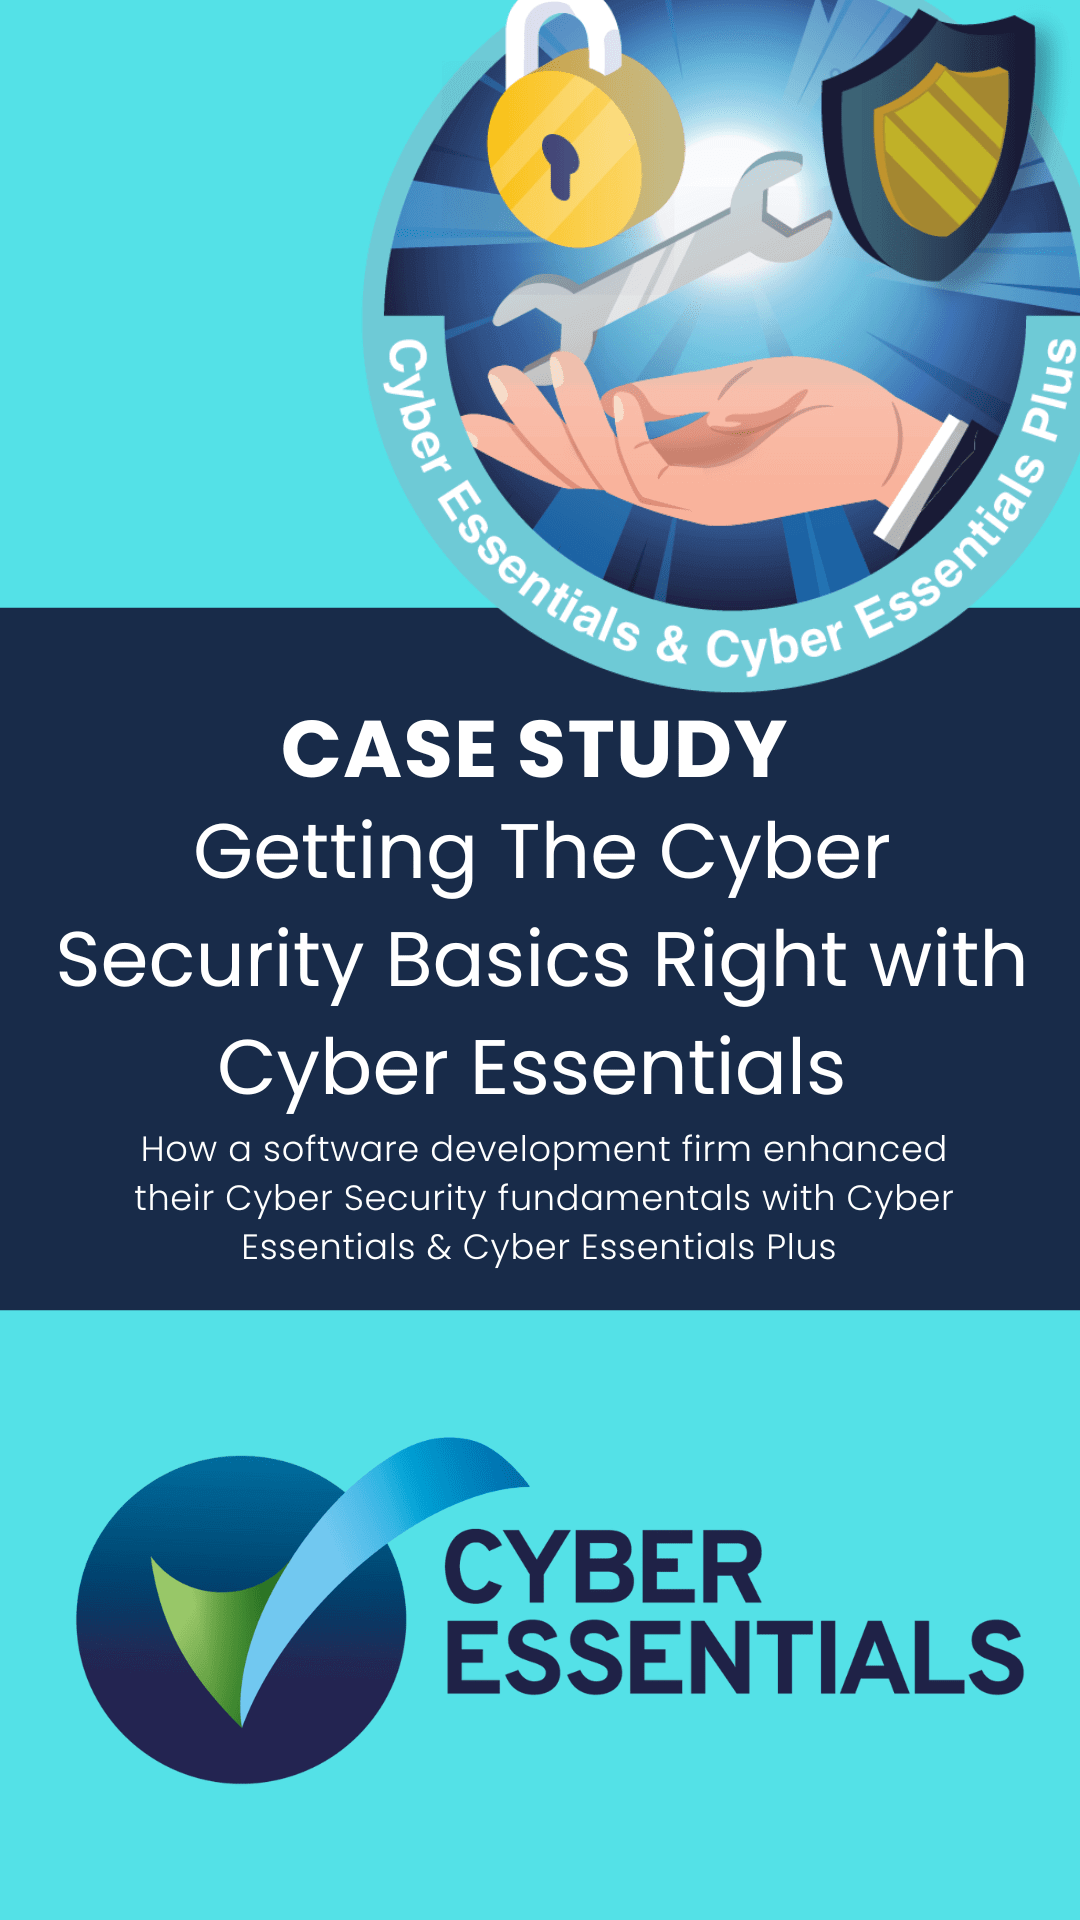 Cyber Essentials case study